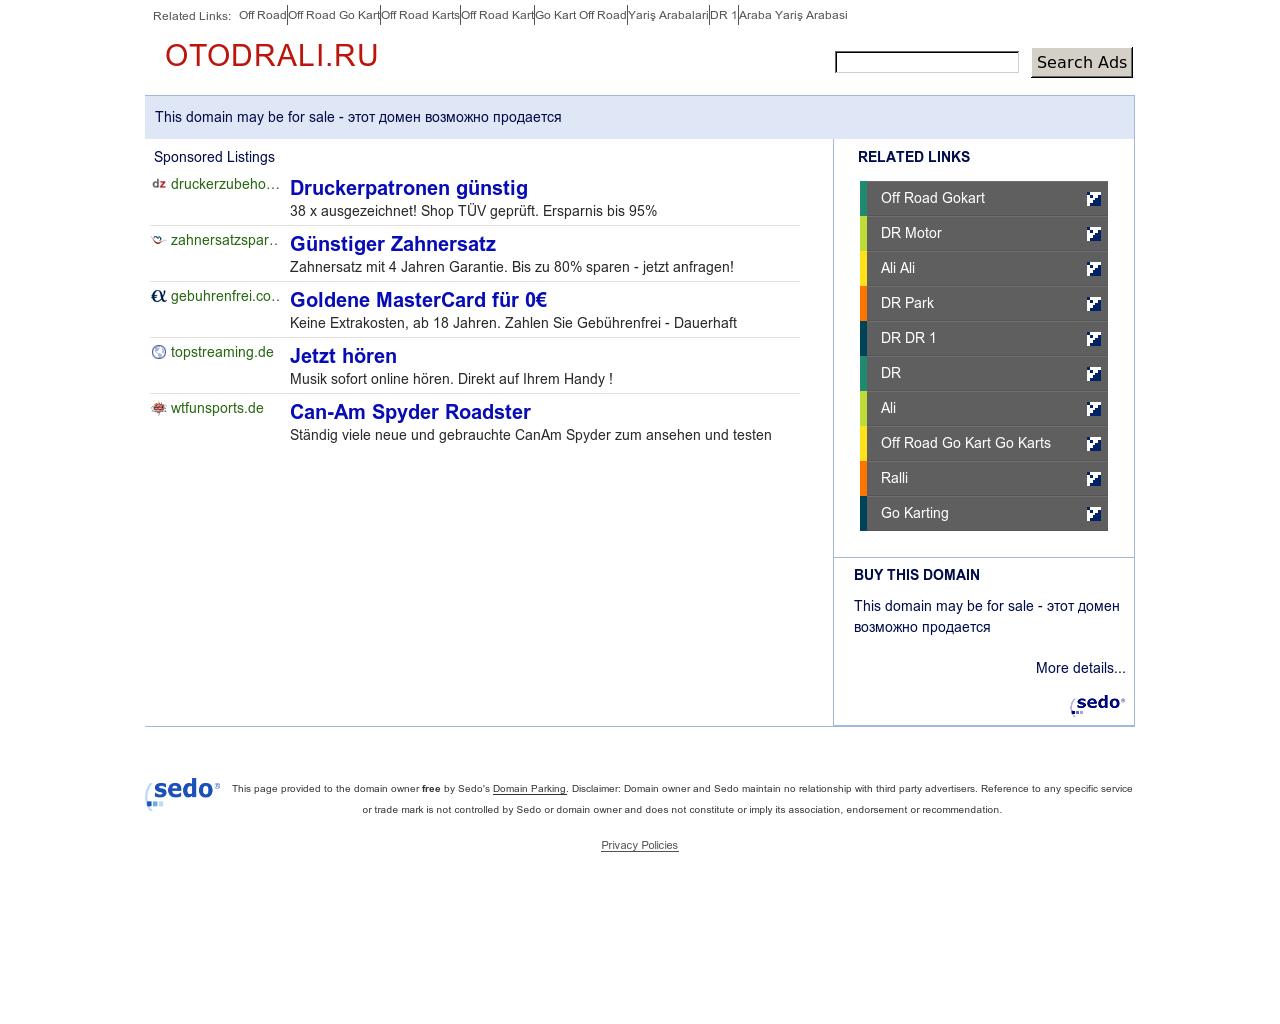 Изображение сайта otodrali.ru в разрешении 1280x1024